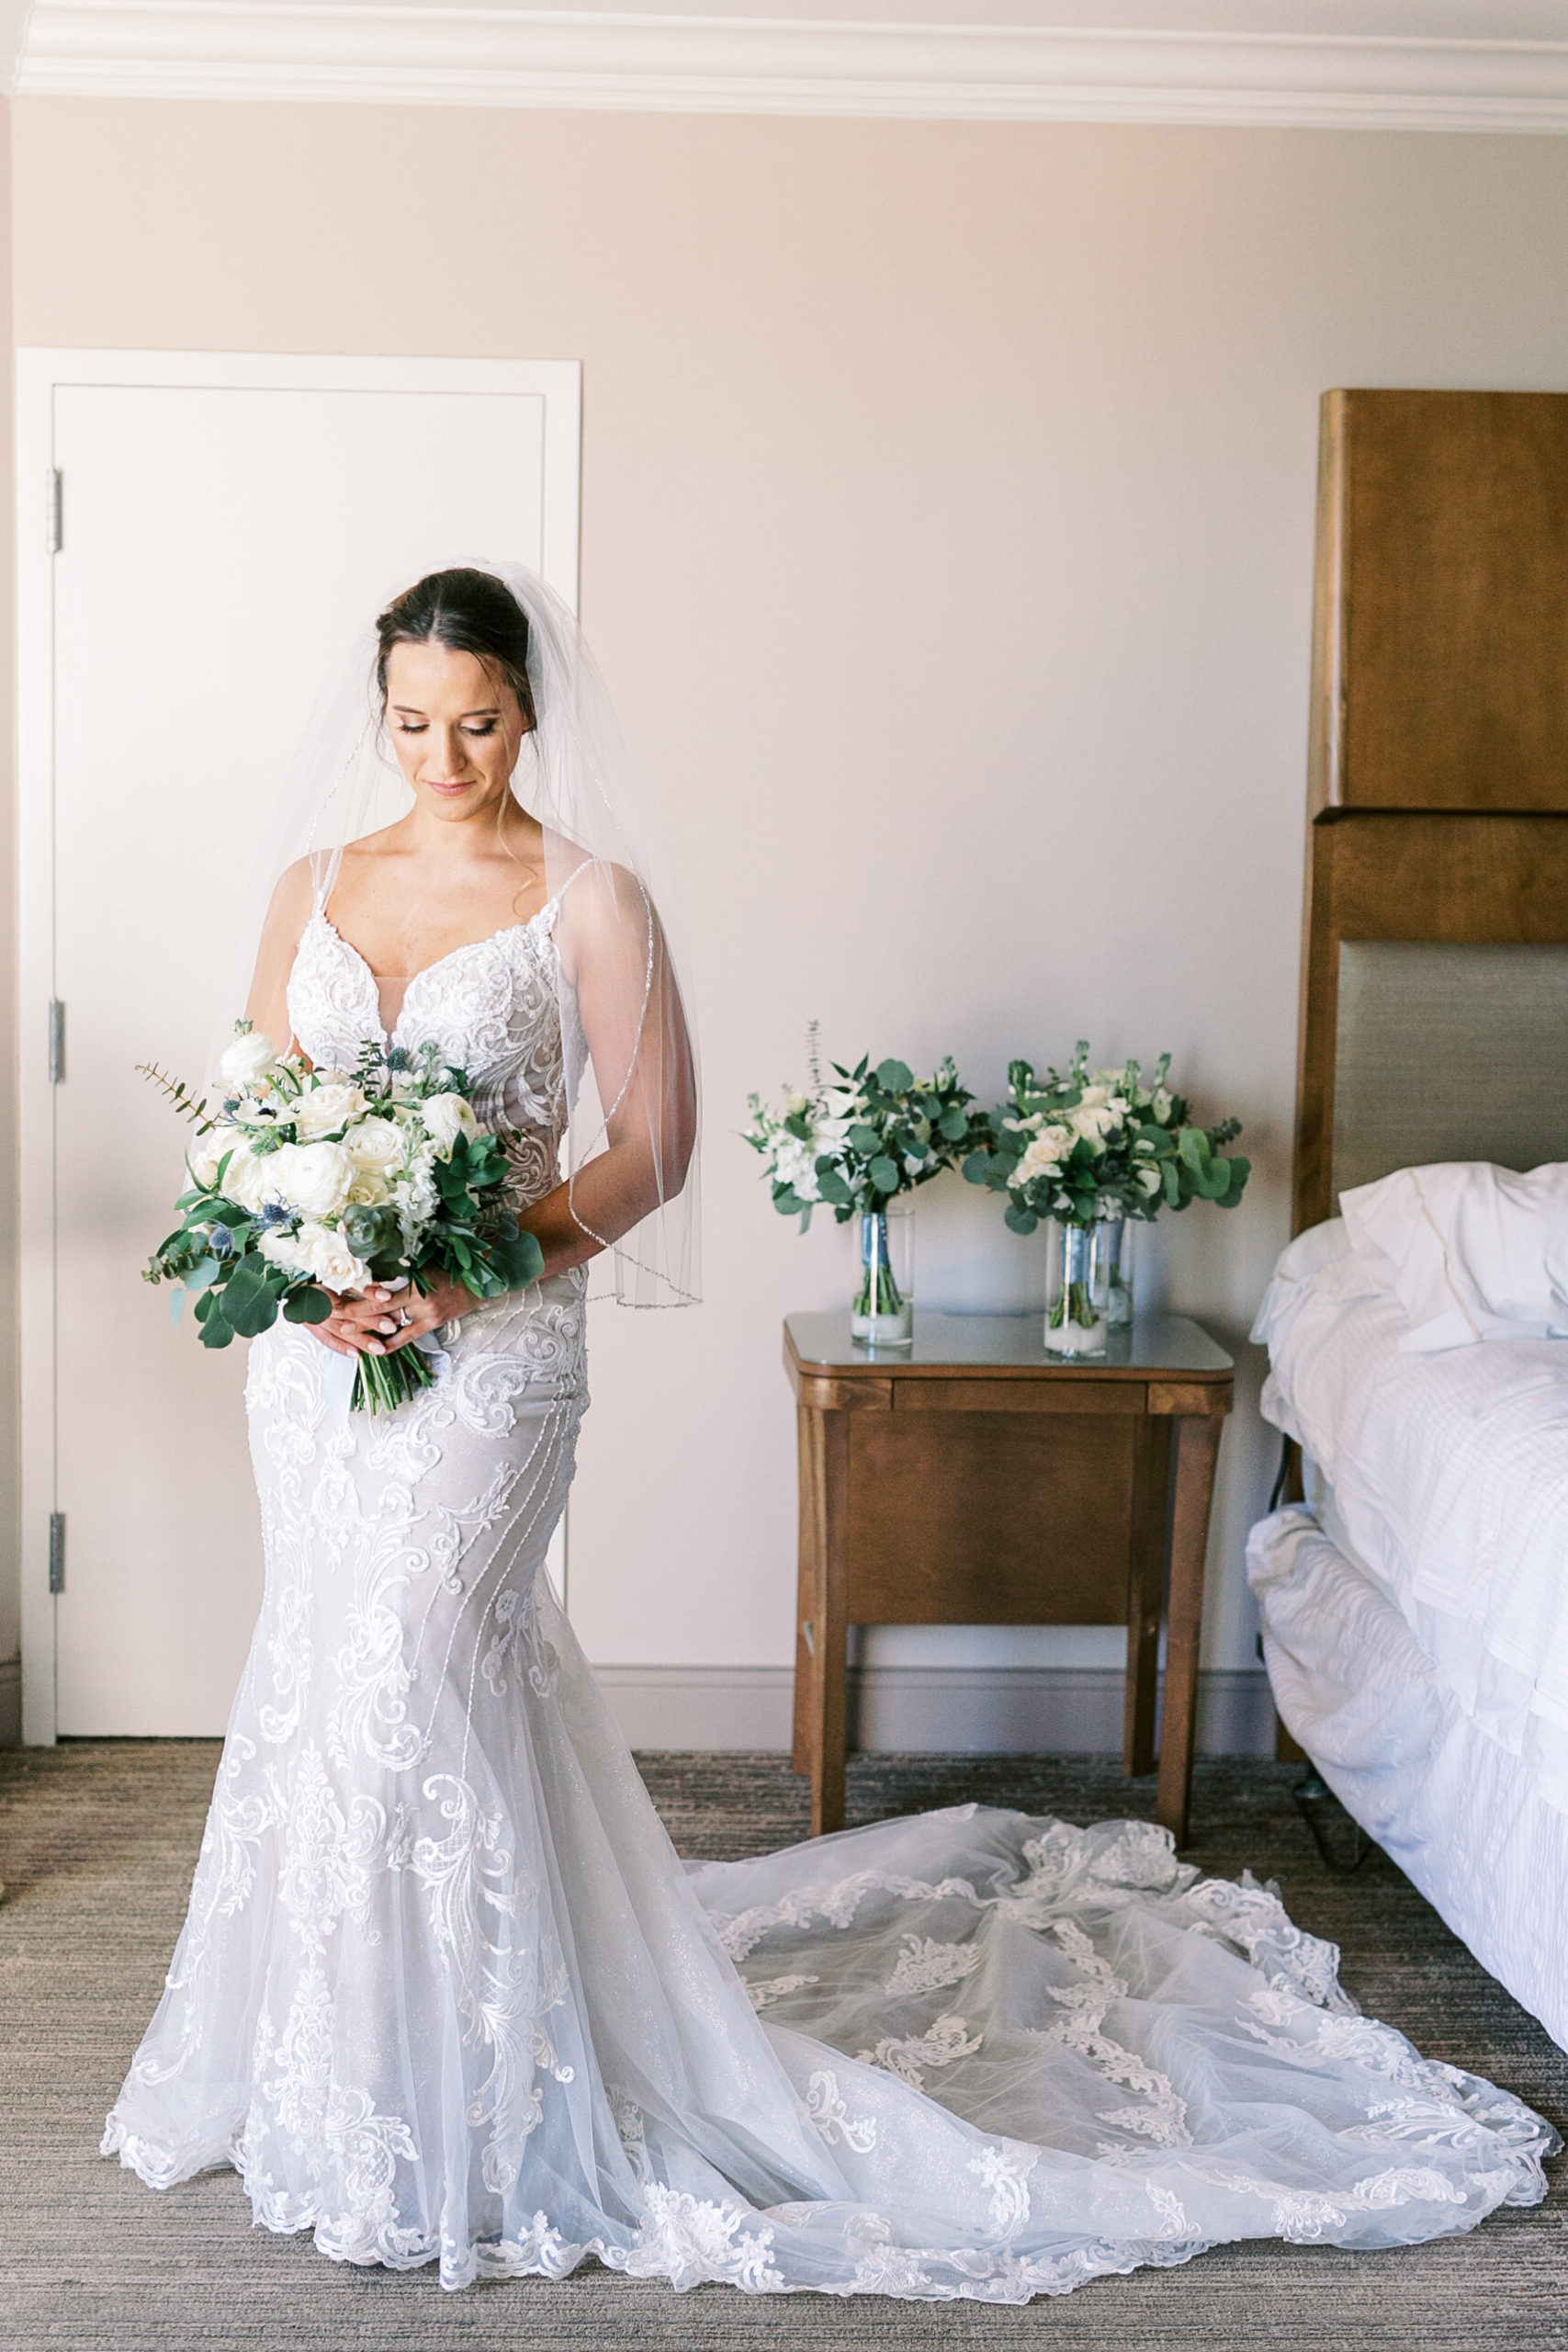 Stunning bridal wedding portrait from Hilton Head Island wedding photographer.